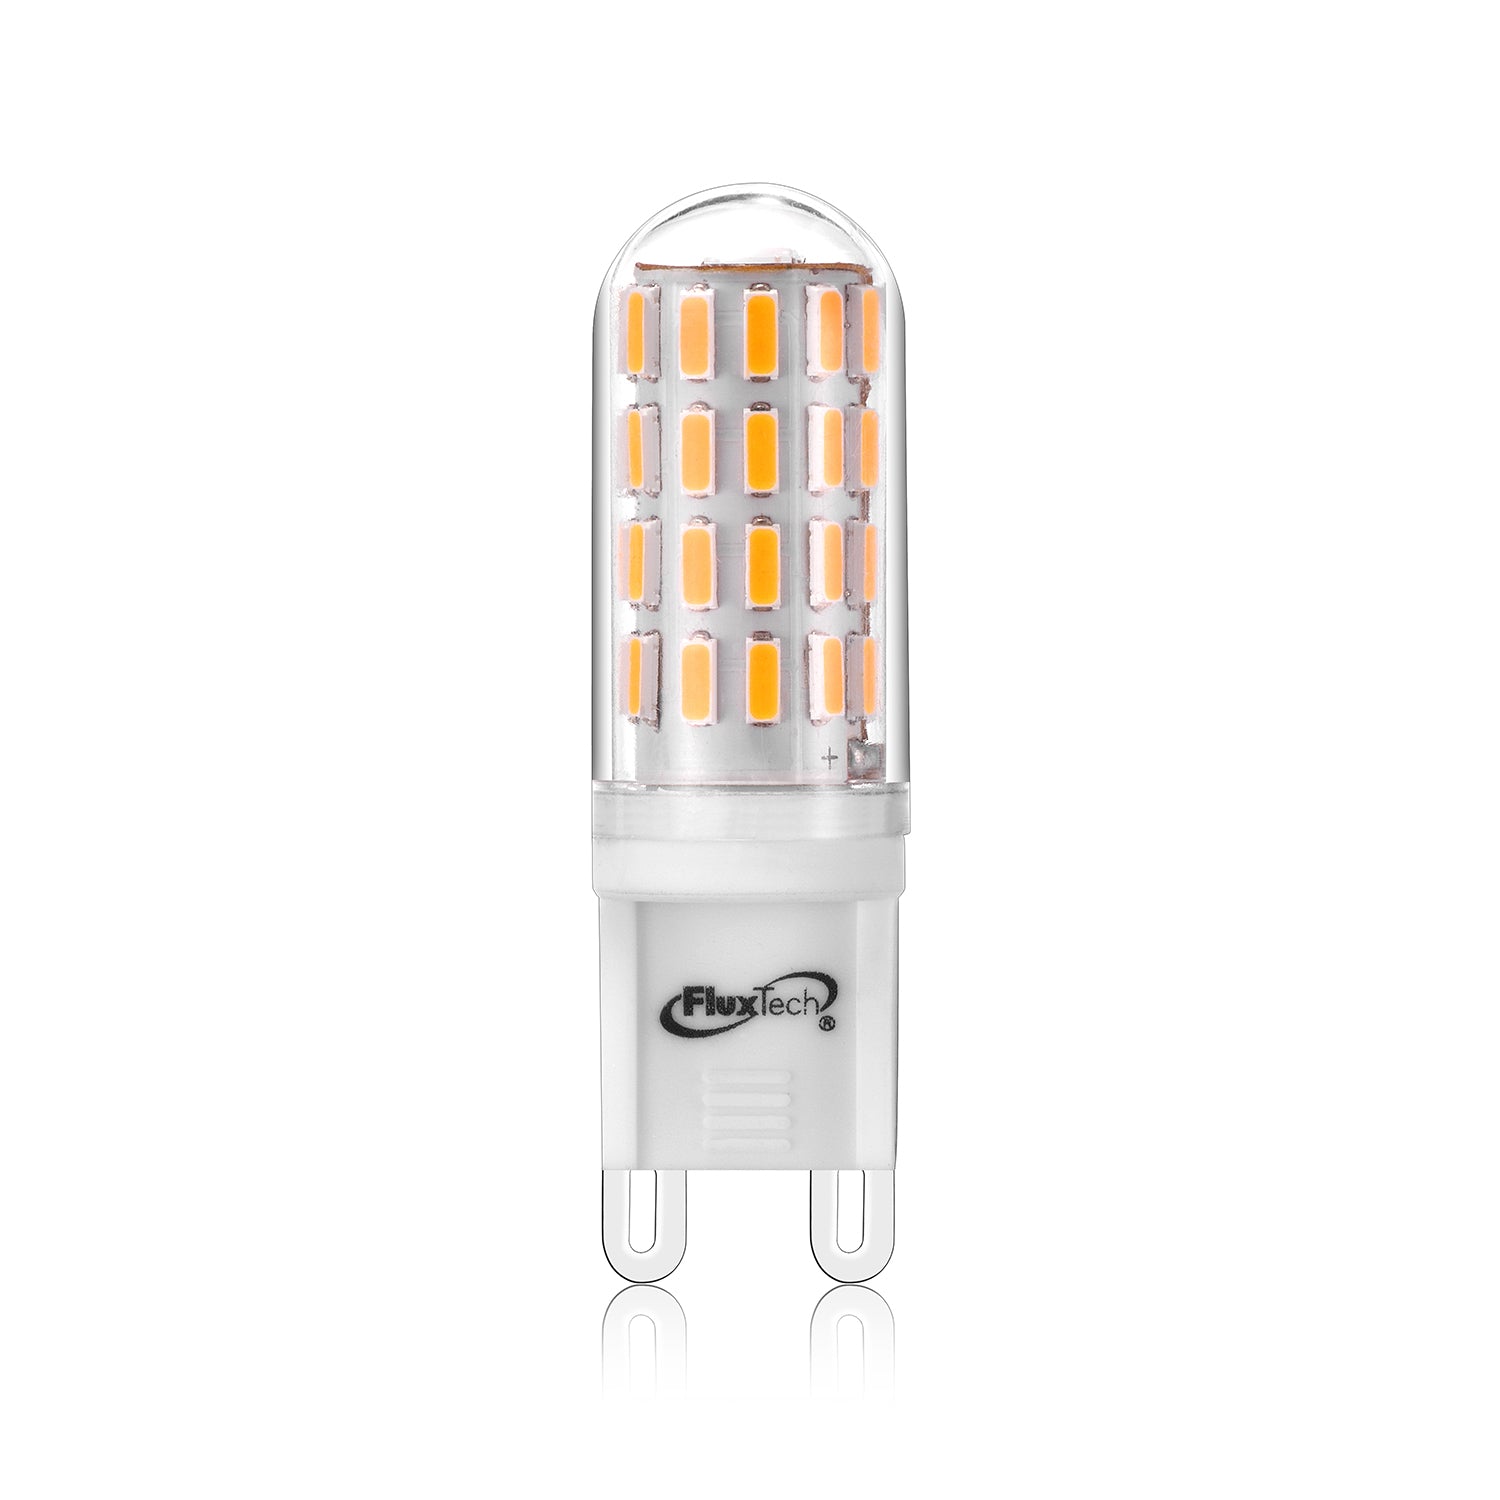 FluxTech - Universal Voltage Bullet style G9 LED Bulb